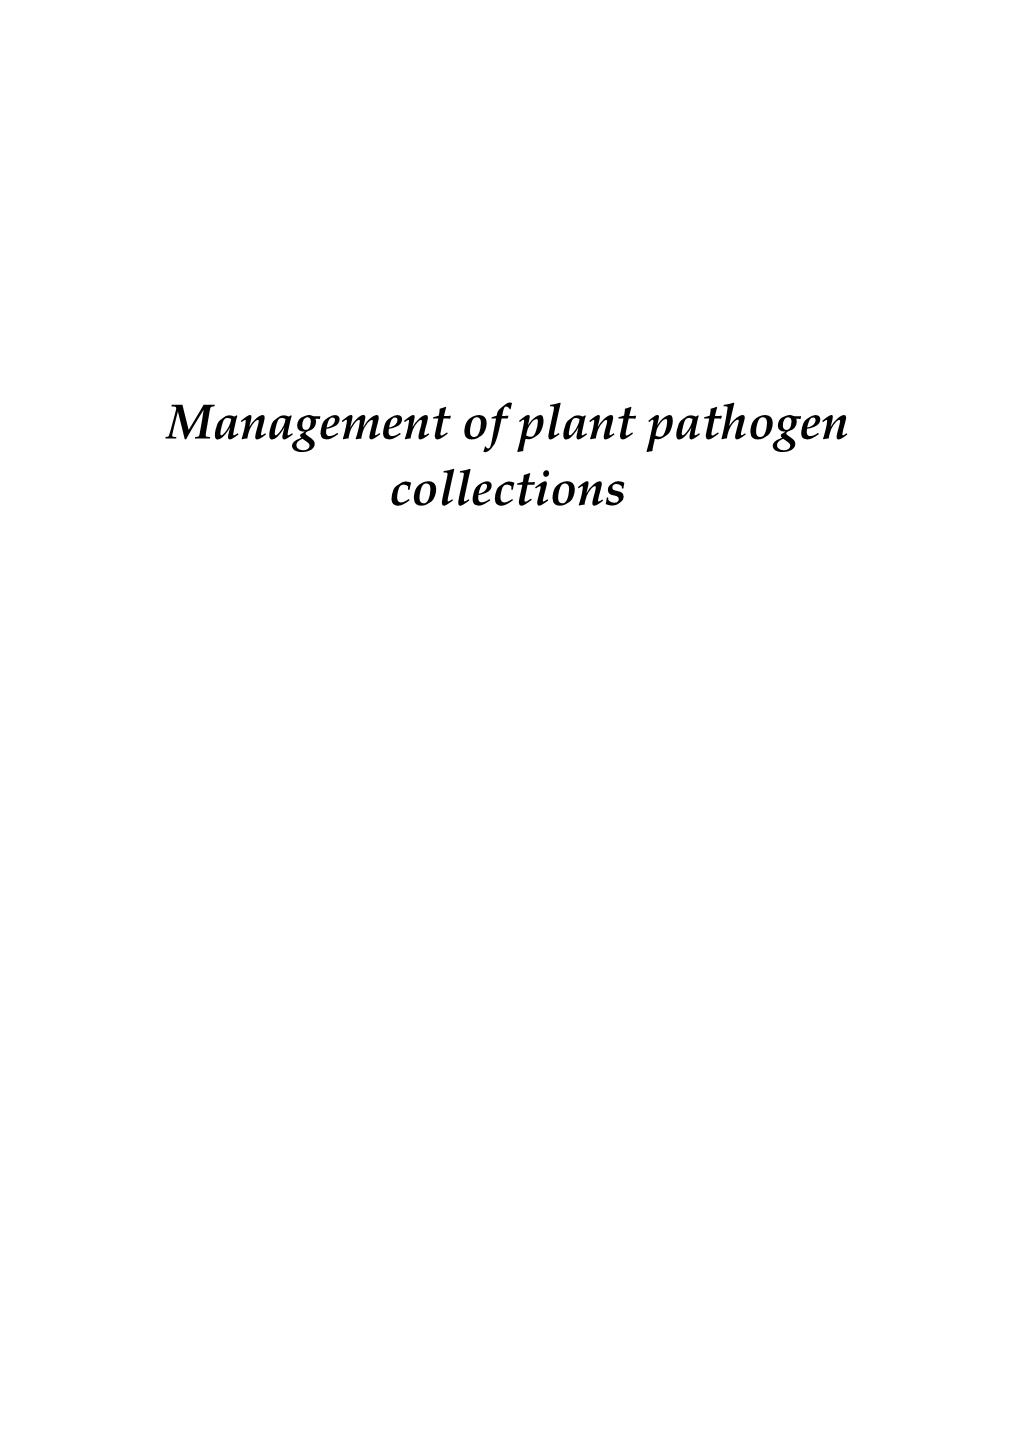 Management of Plant Pathogen Collections